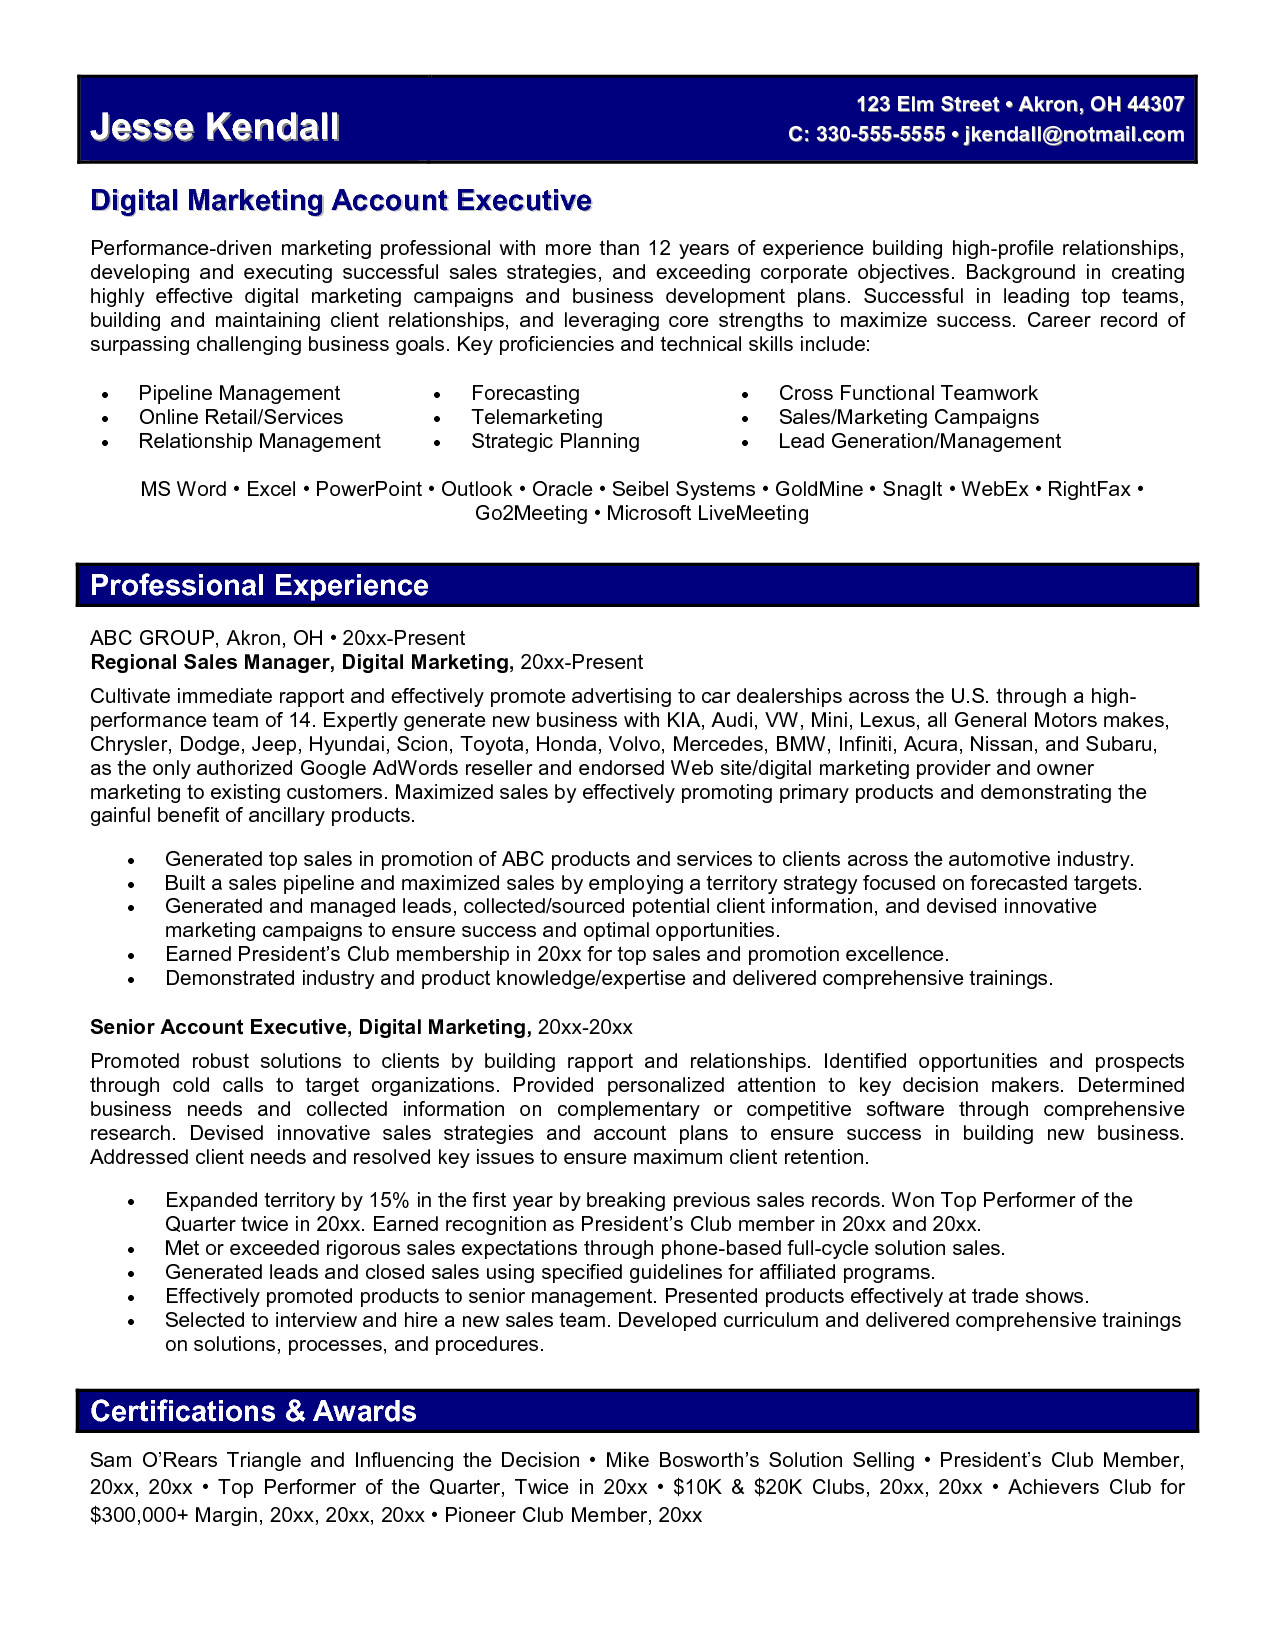 Digital Marketing Resume Sample Digital Marketing Resume Fotolip Rich Image and